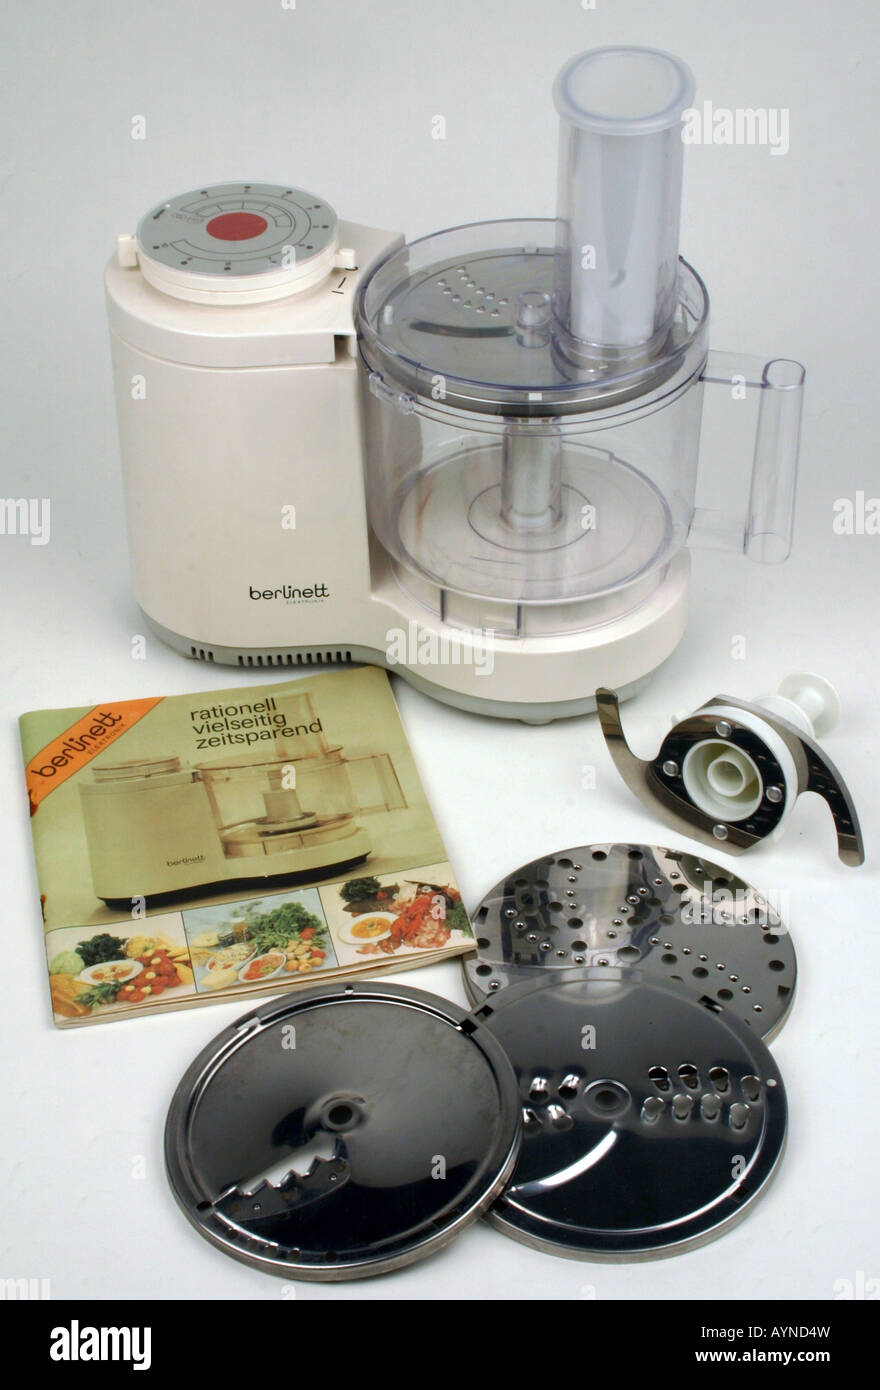 household, kitchen and kitchenware, kitchen machine "berlinett" electric,  produced by: VEB Elektromechanik Berlin-Kausldorf, GDR, 1986 Stock Photo -  Alamy